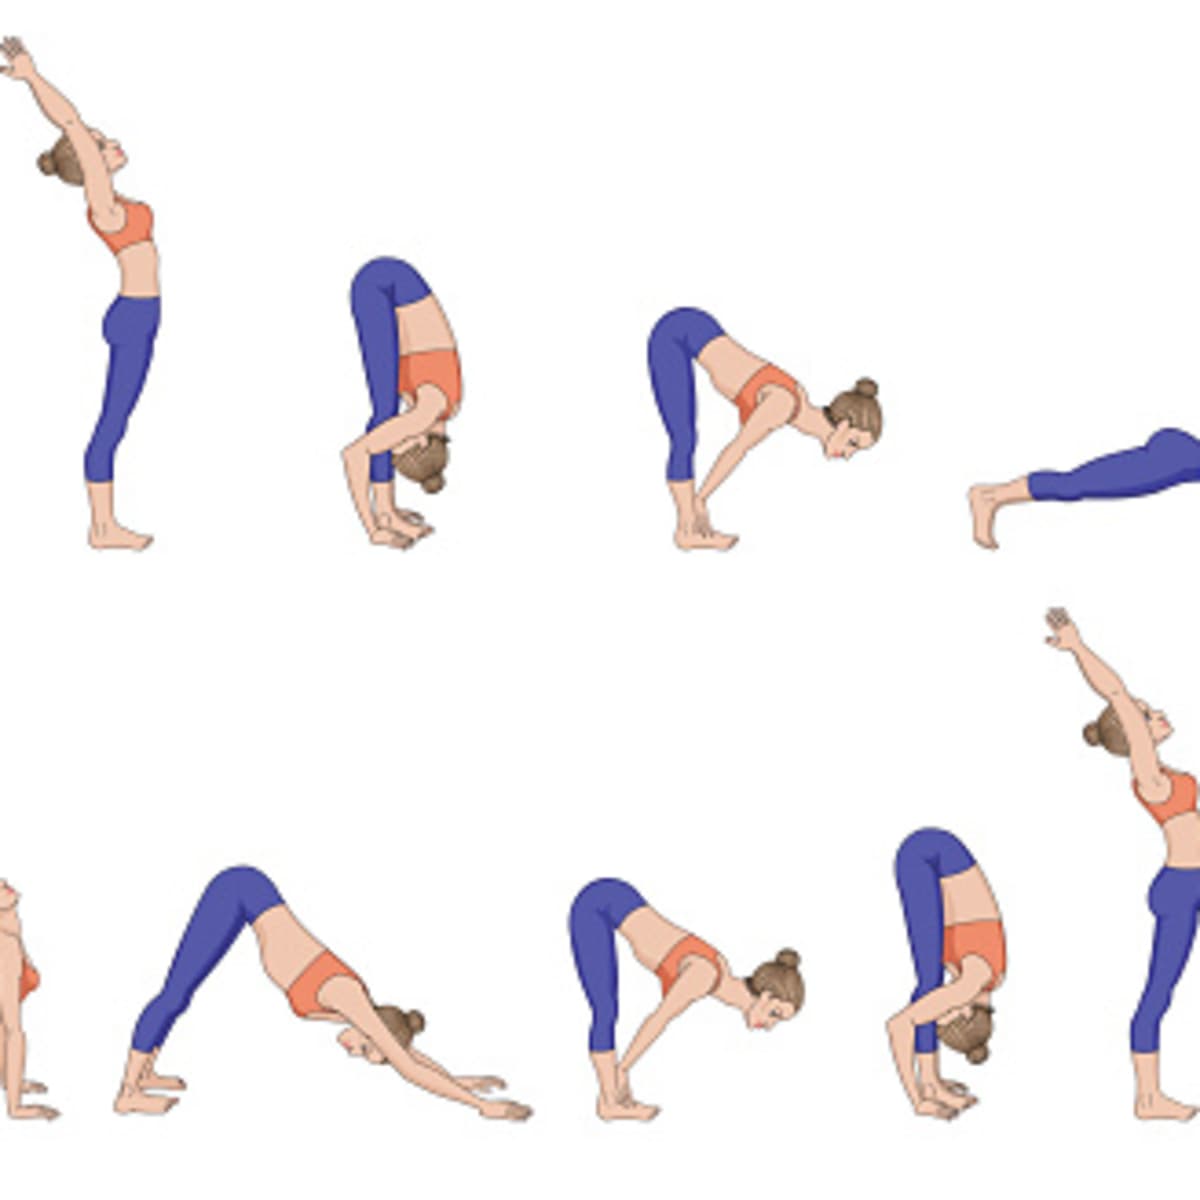 Kundalini Yoga for Beginners